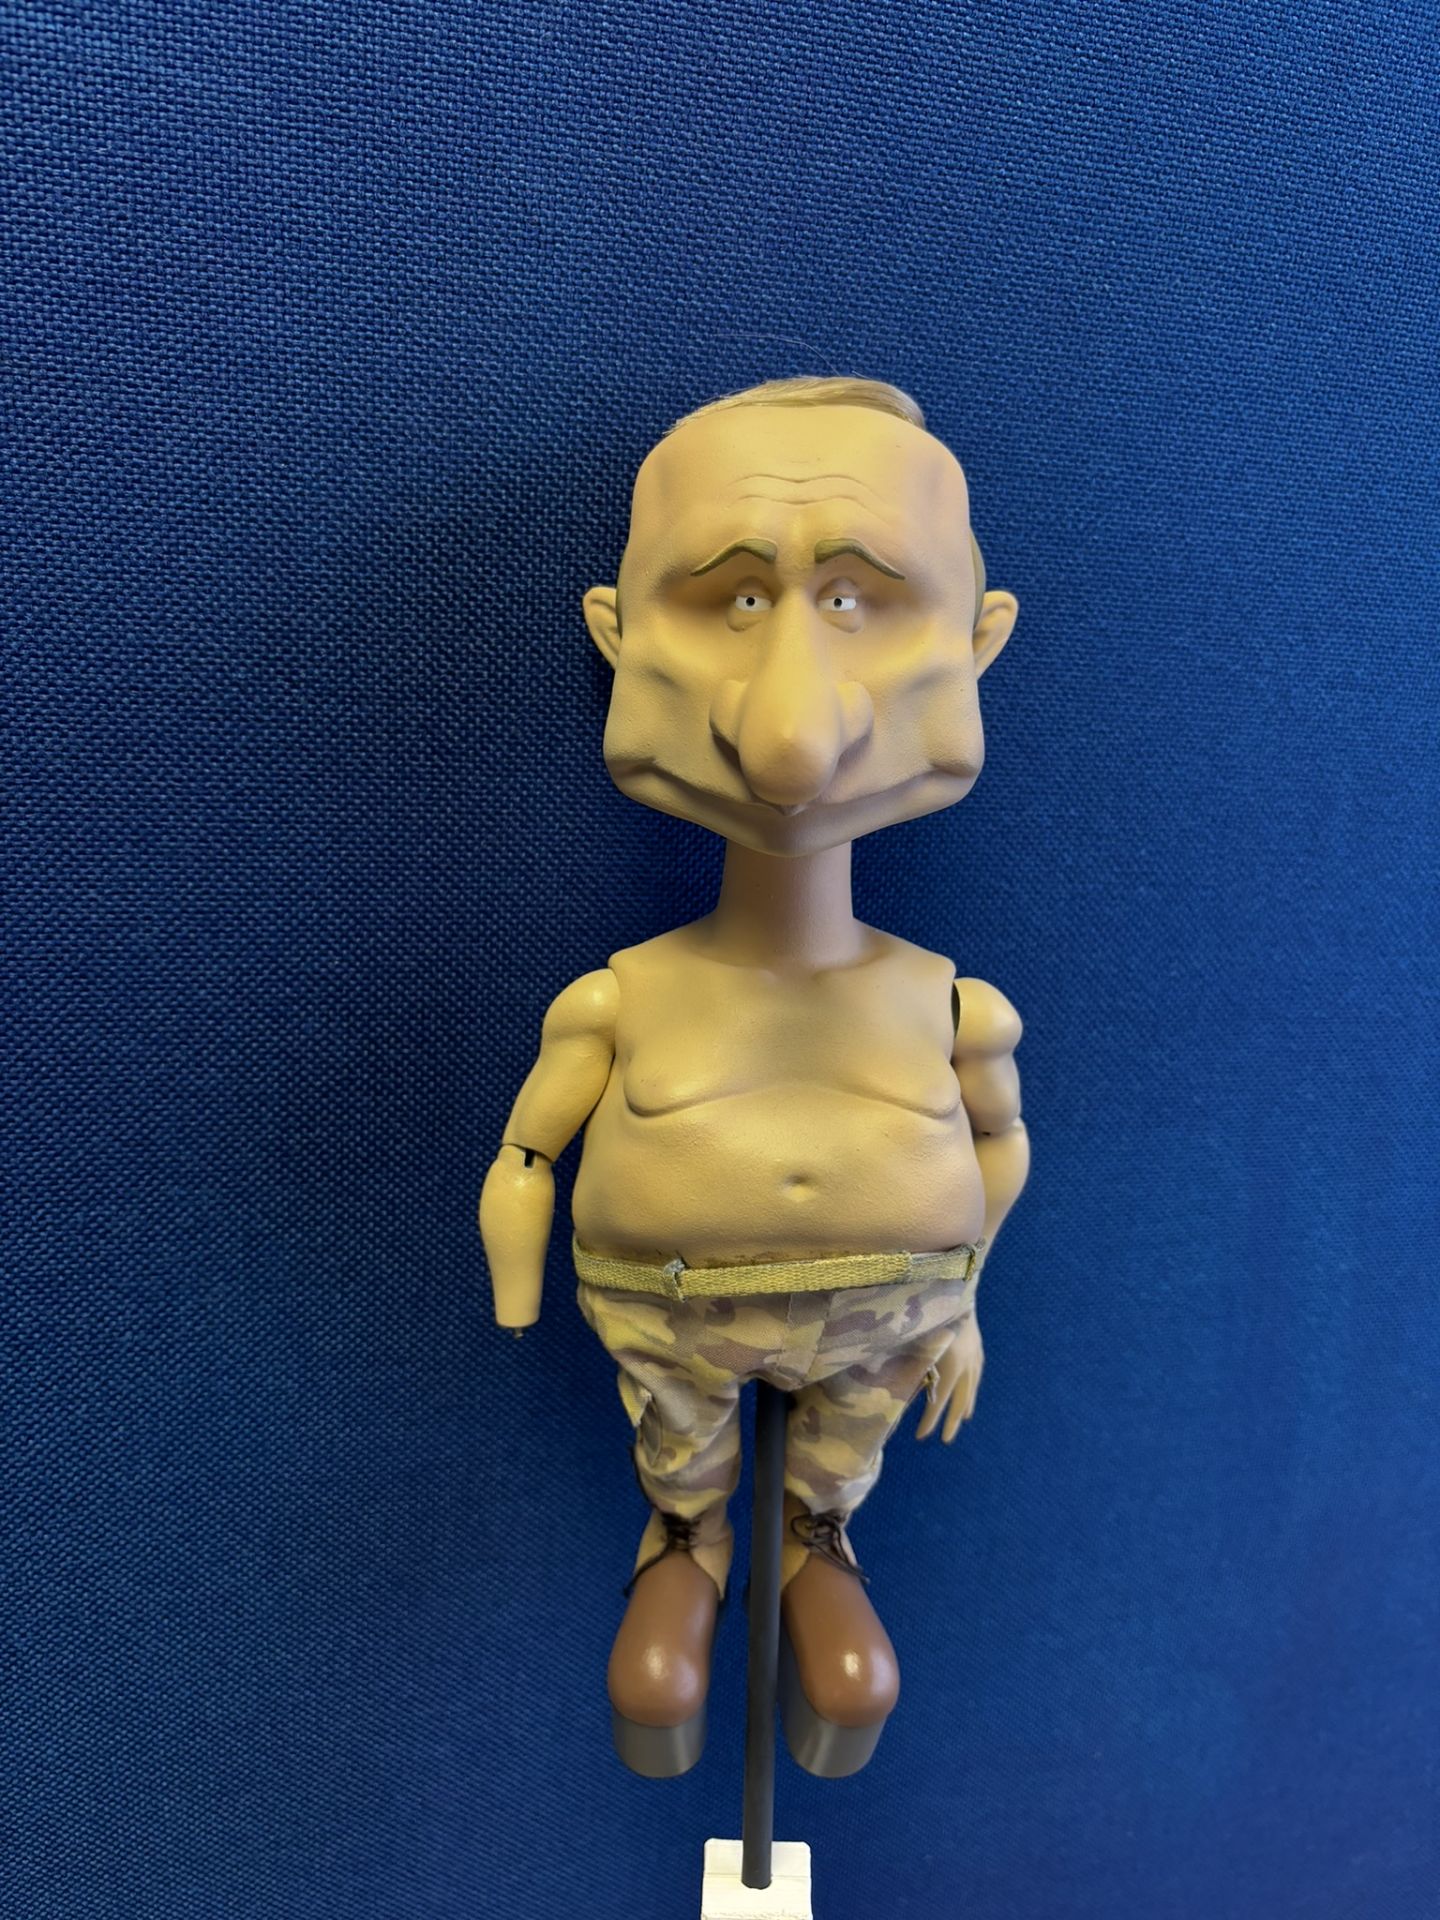 Newzoid puppet - Vladimir Putin - Image 3 of 5